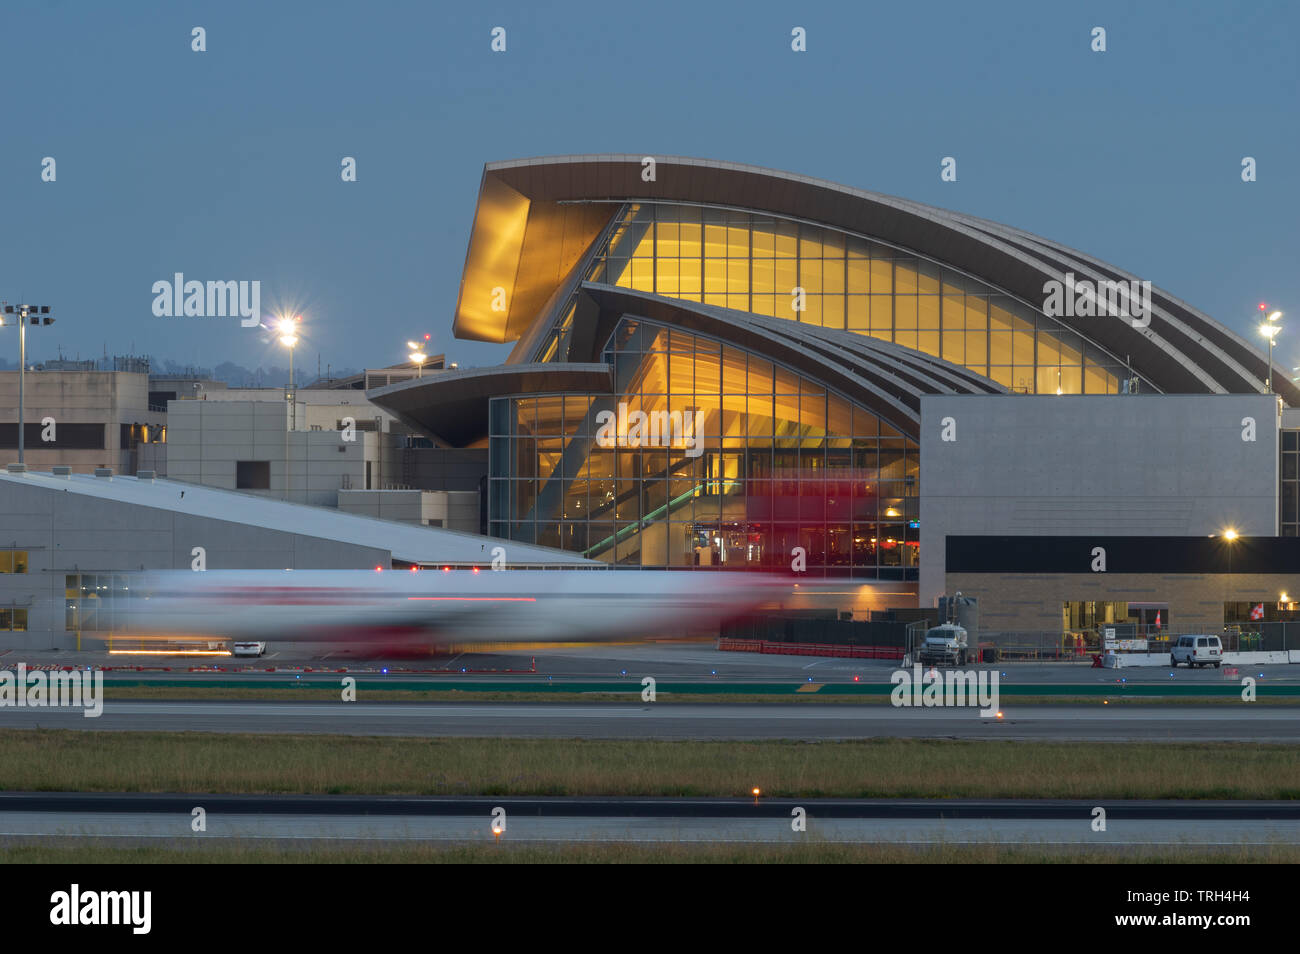 Tom Bradley terminal at LAX, Los Angeles International Airport. Twilight scene. Stock Photo